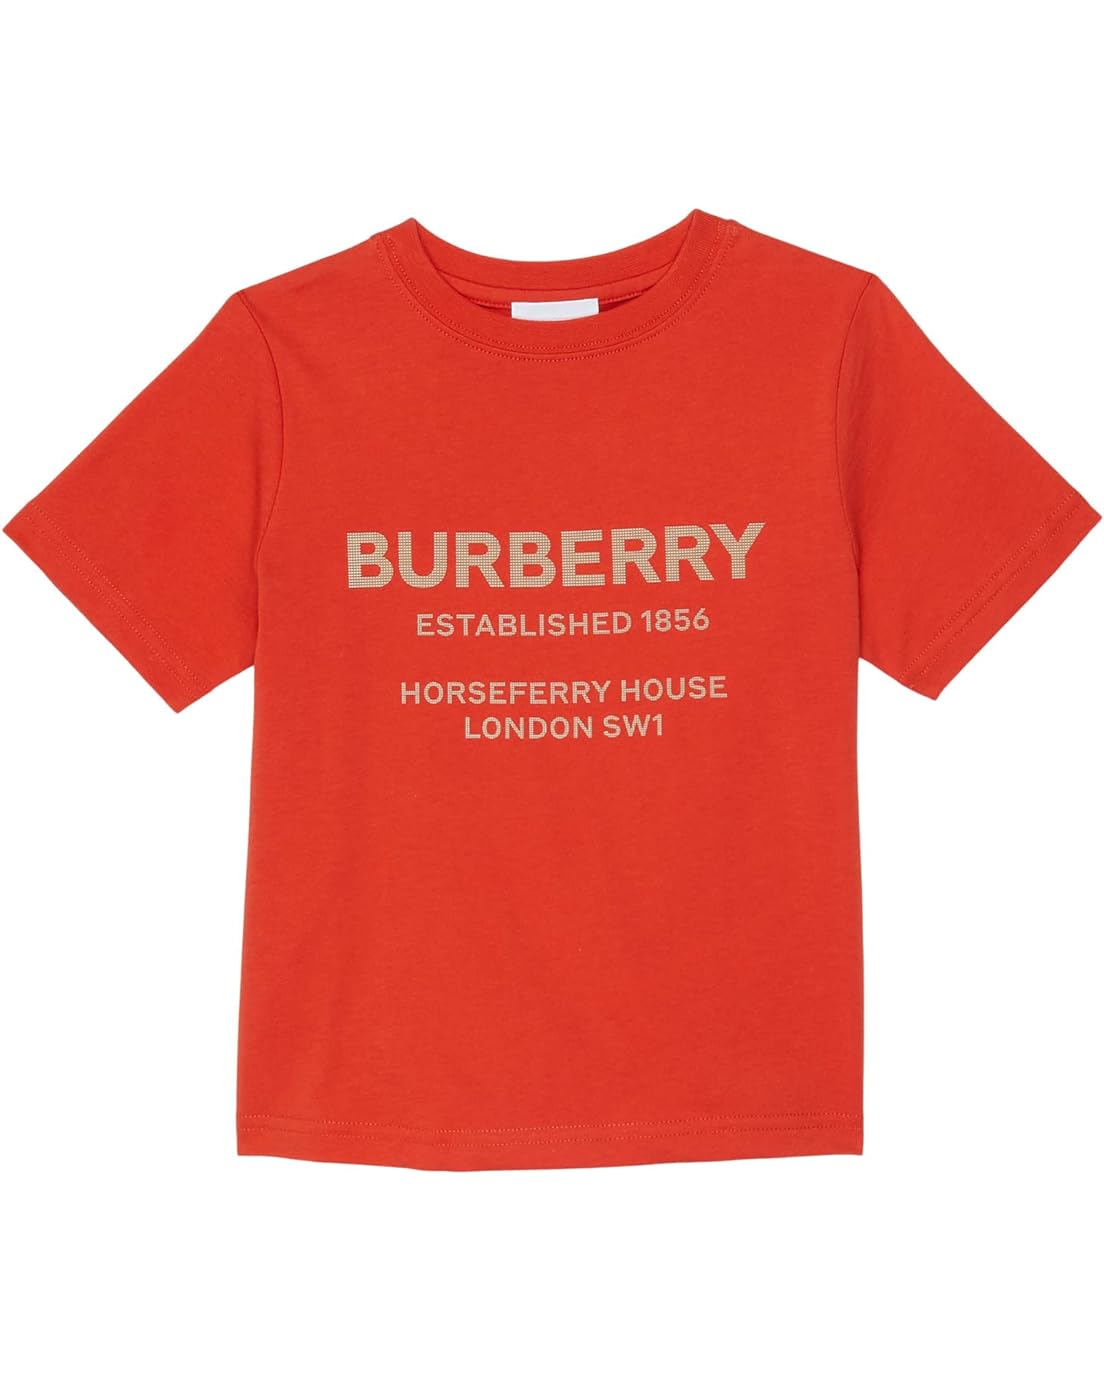 Burberry Kids Bristle Tee (Little Kids/Big Kids)